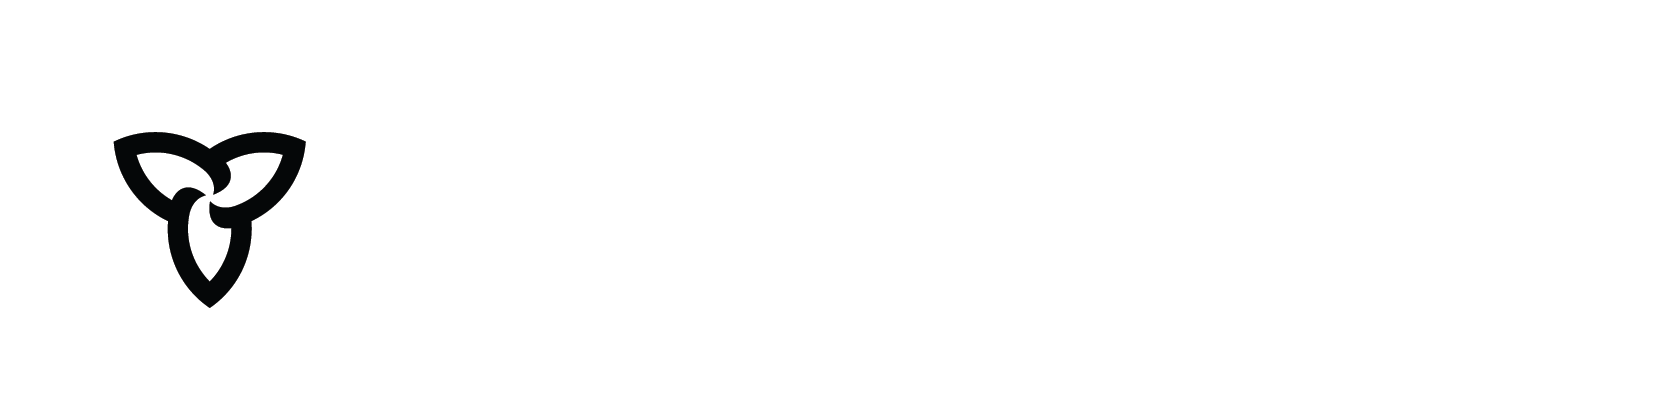 Invest Ontario logo - French, white transparent